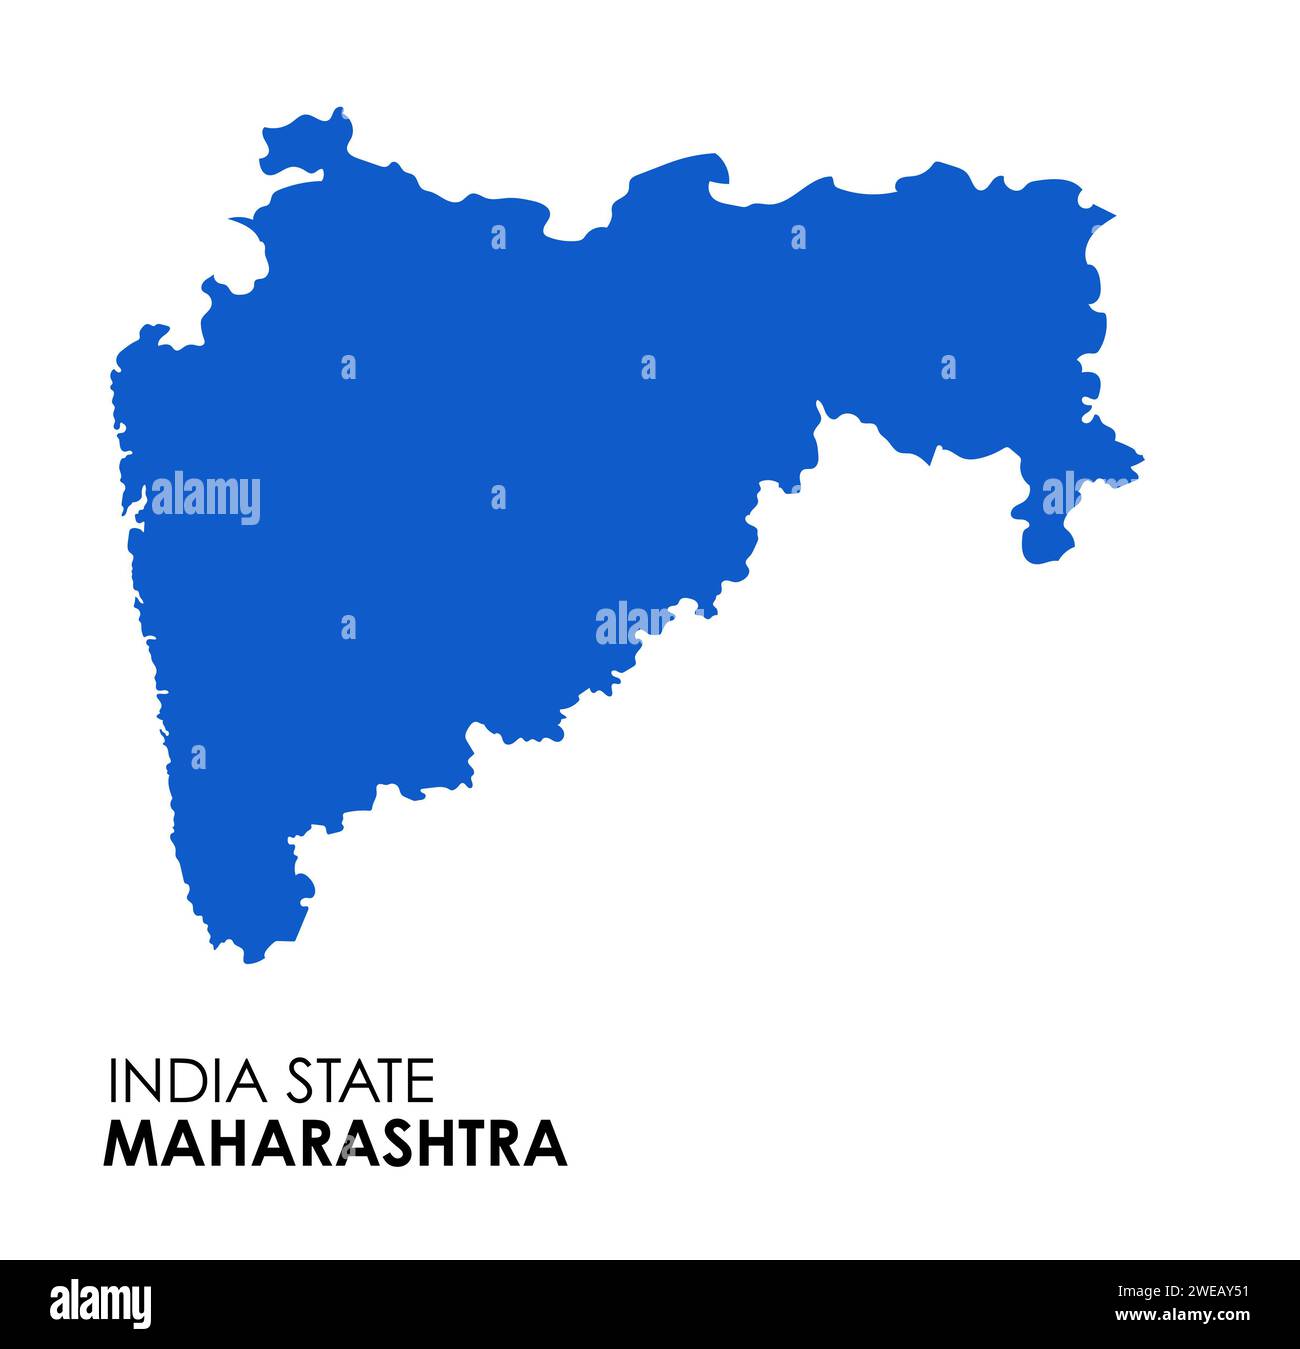 Carte Maharashtra de l'état indien. Illustration vectorielle de carte Maharashtra. Fond blanc. Banque D'Images